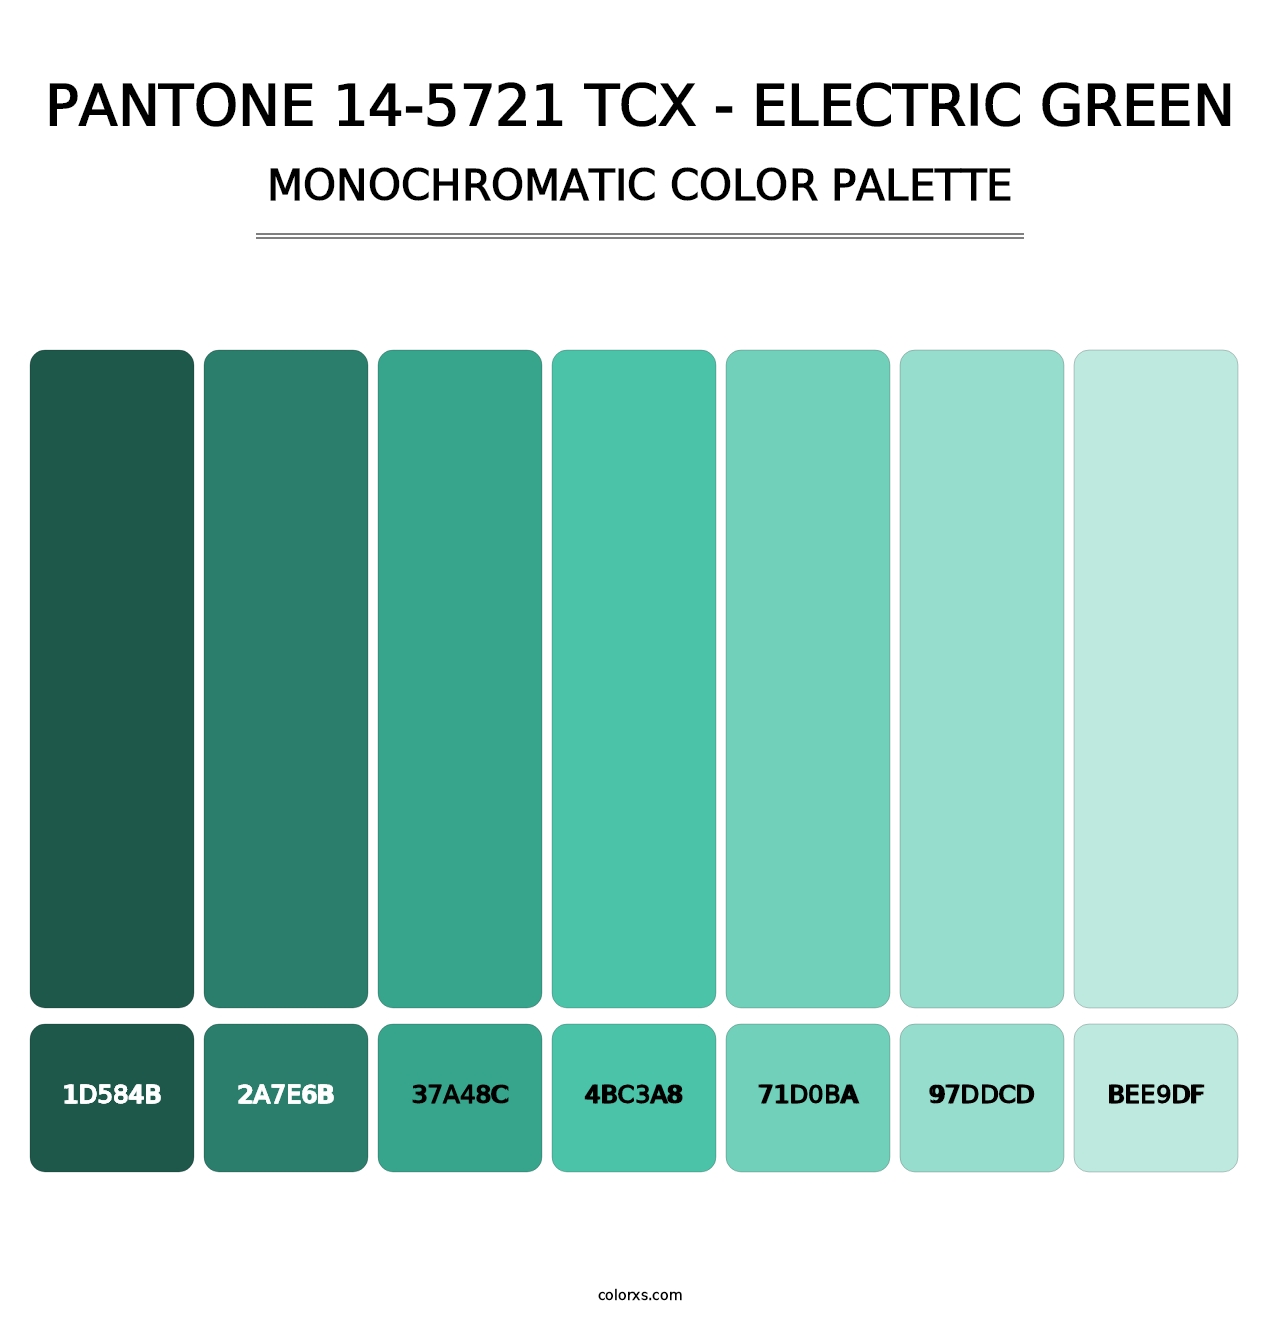 PANTONE 14-5721 TCX - Electric Green - Monochromatic Color Palette